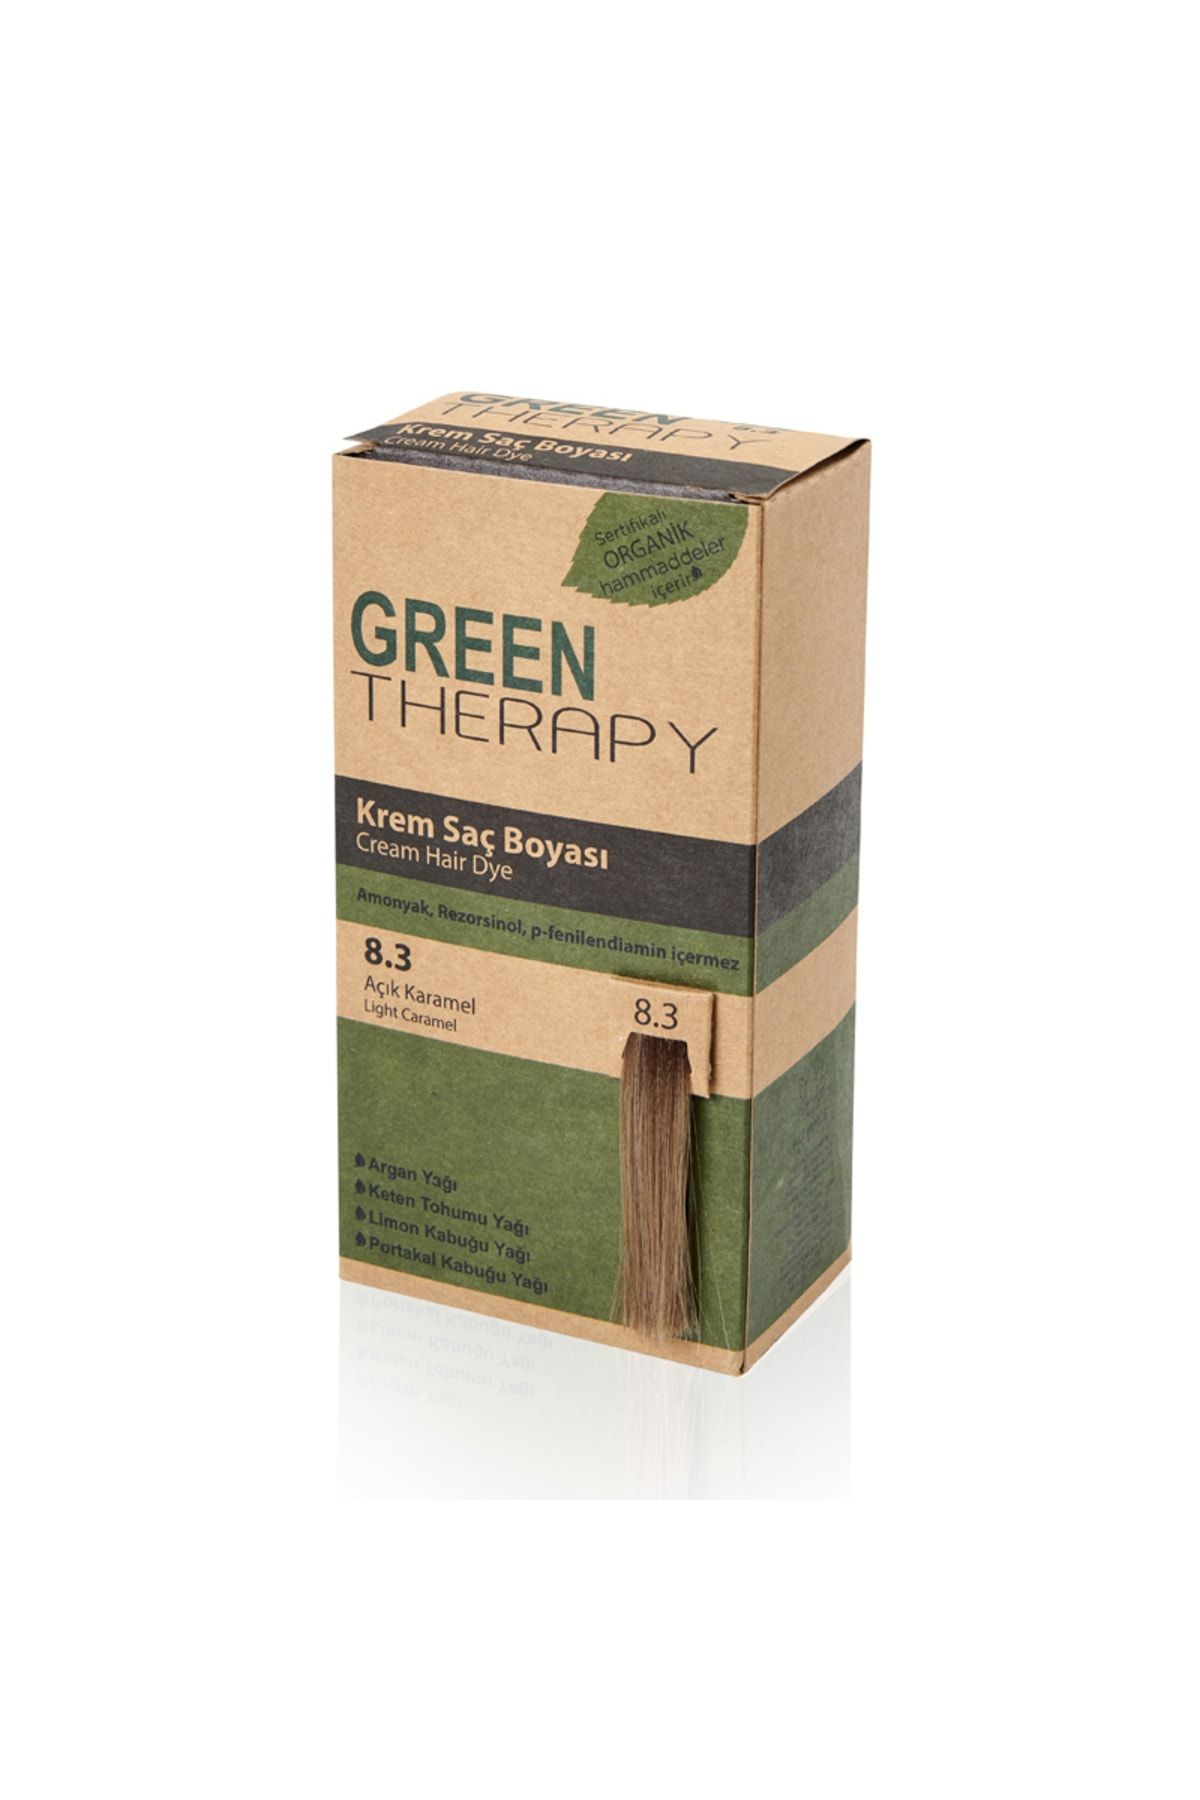 Green Therapy Krem Saç Boyası 8.3 Açık Karamel